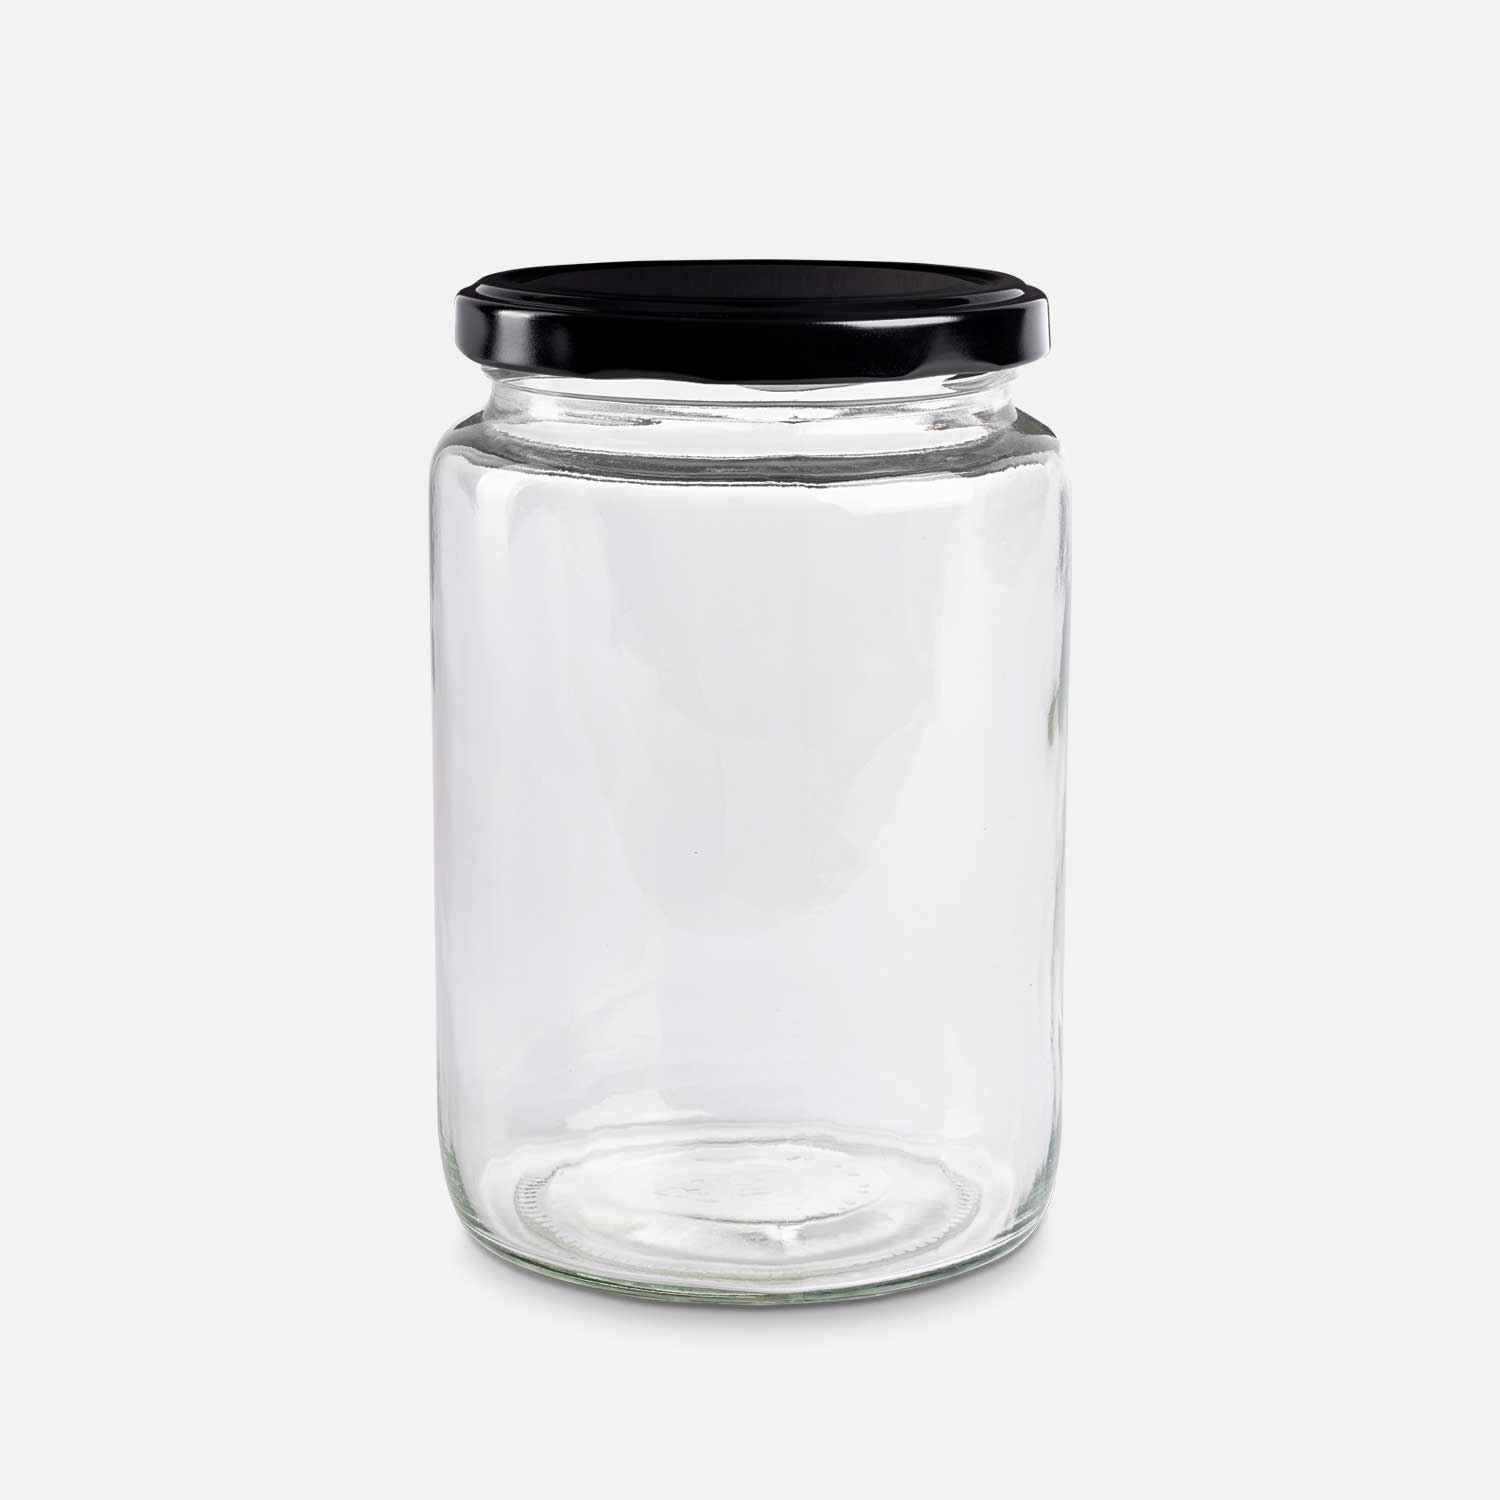 Round preserving jar with a black aluminium lid